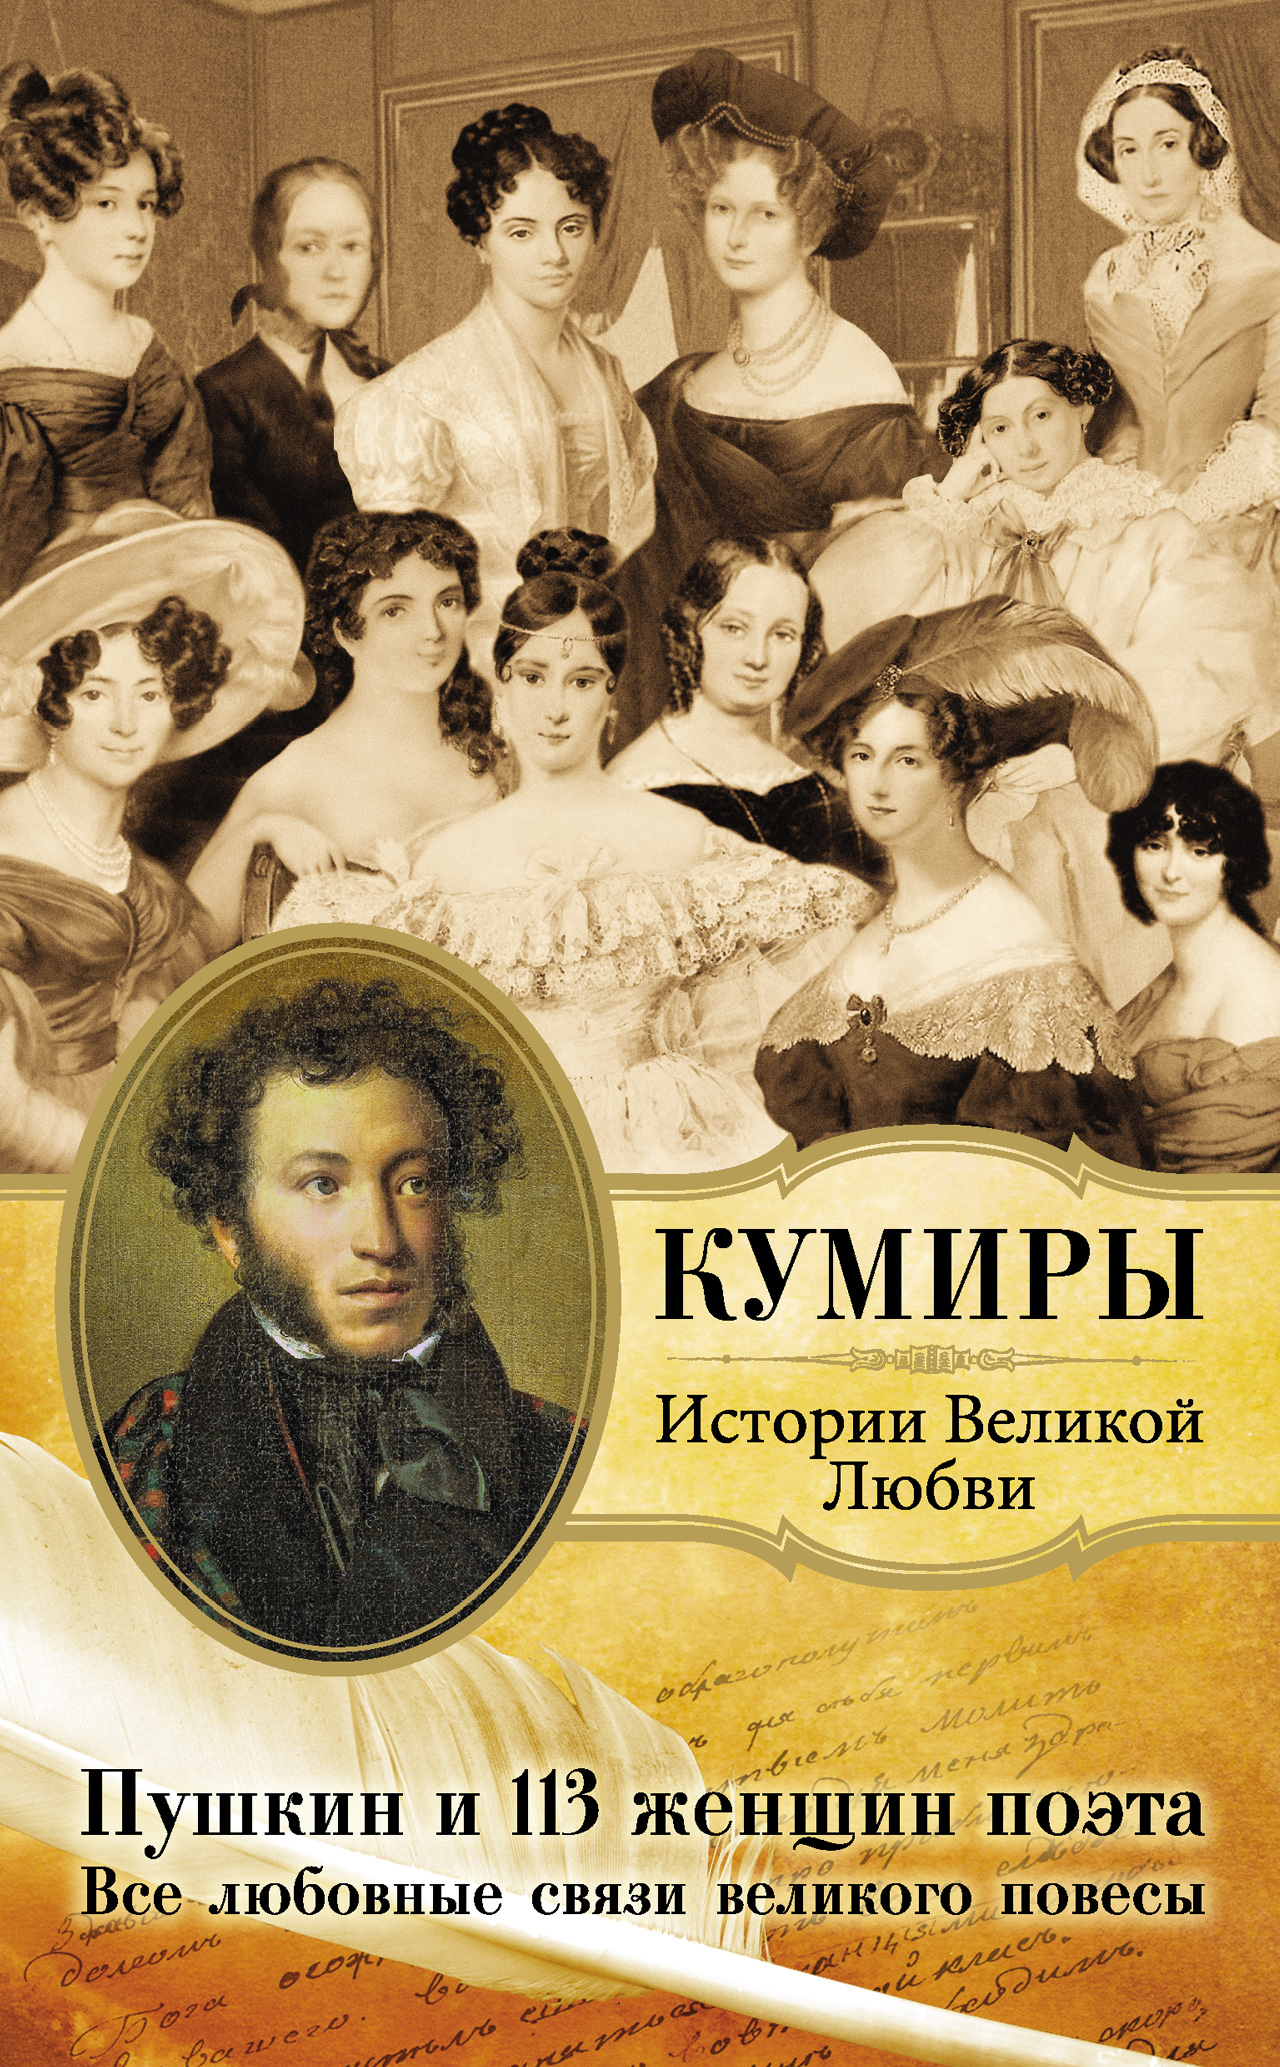 У пушкина было 113 девушек. Пушкин и 113 женщин поэта. 113 Женщин Пушкина книга. Любовь Пушкина. Любимые женщины Пушкина.